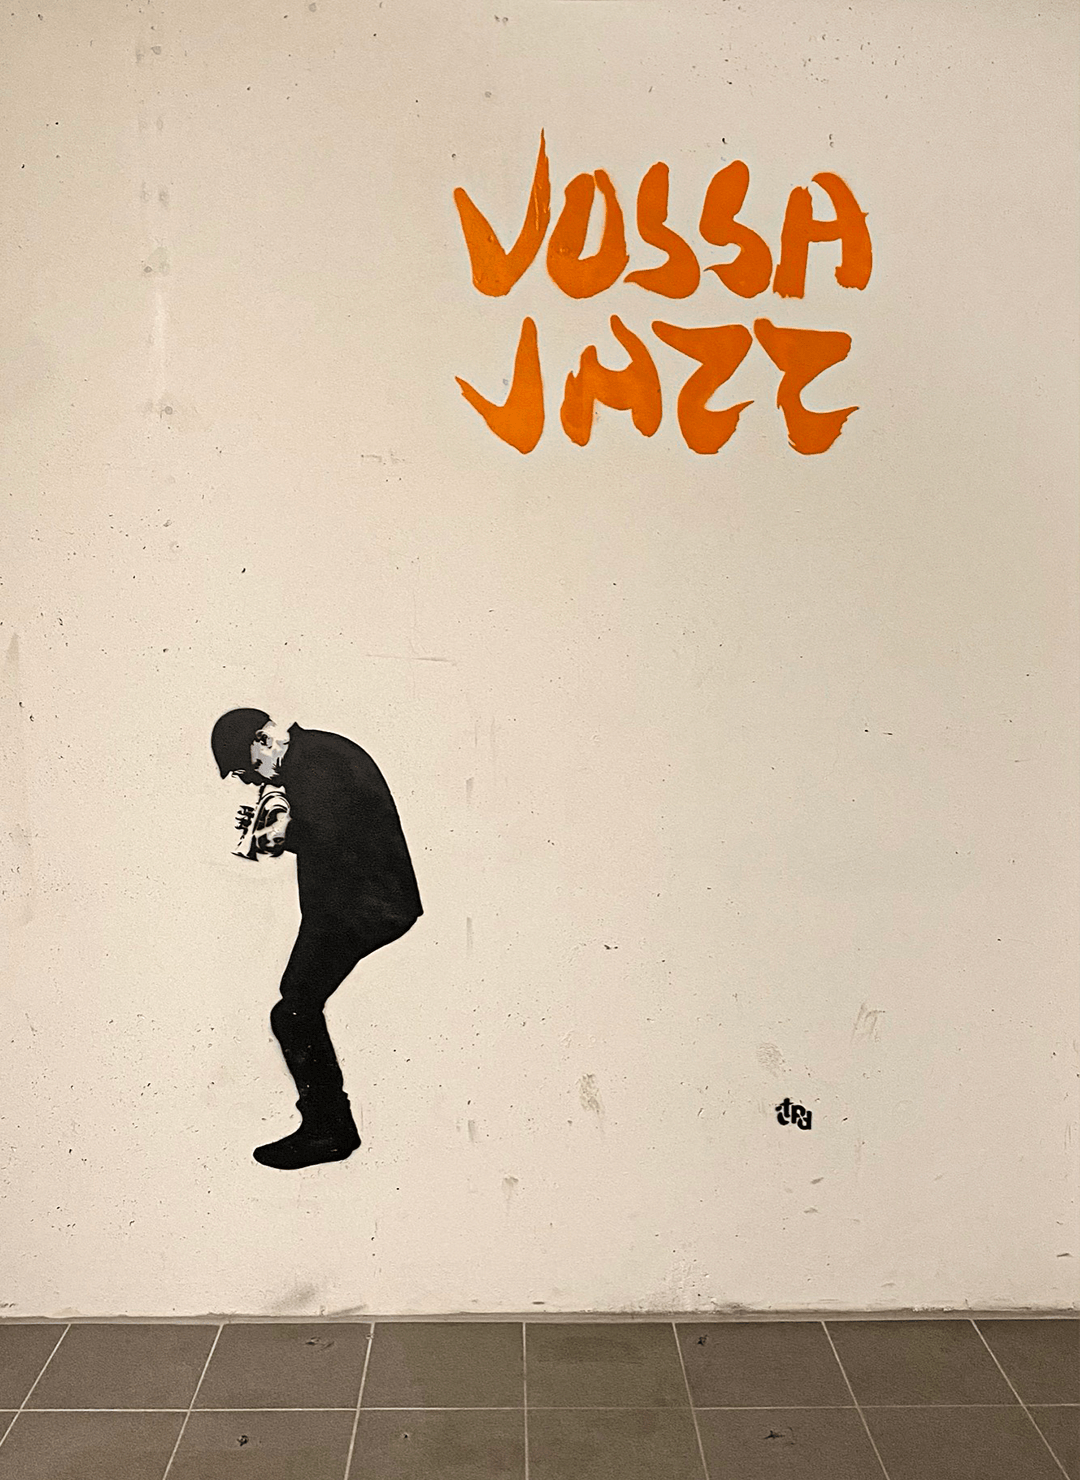 vossa jazz graffiti - trompetist